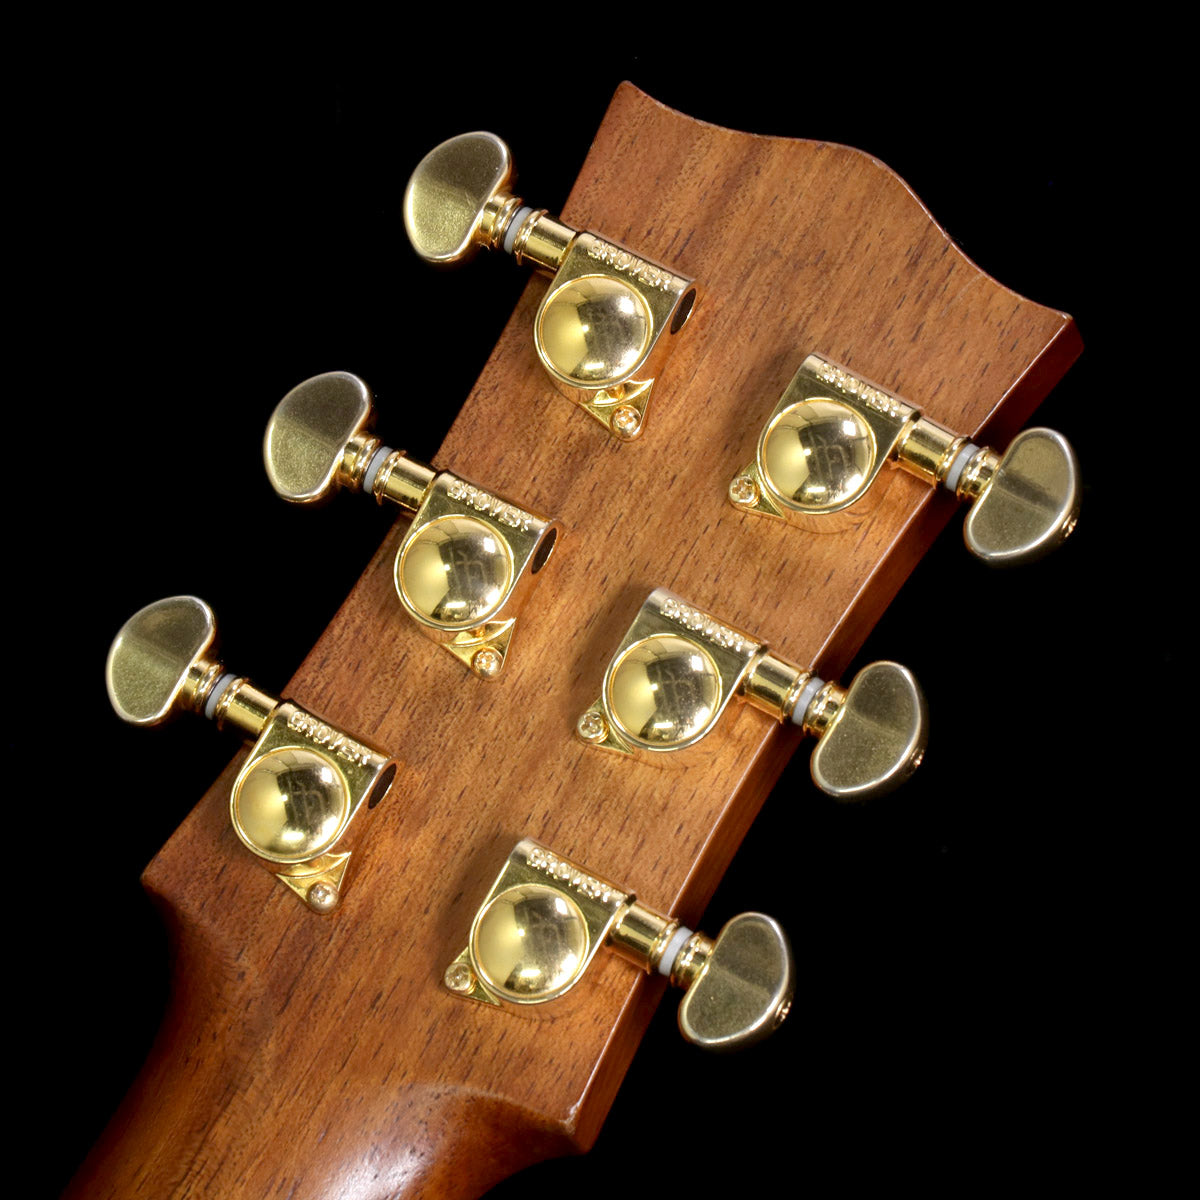 [SN 9219 1FG] USED MATON / EMD6-Diesel Special MINI MATON MATON Eleaco Acoustic Guitar EMD6 Acoustic Guitar [08]